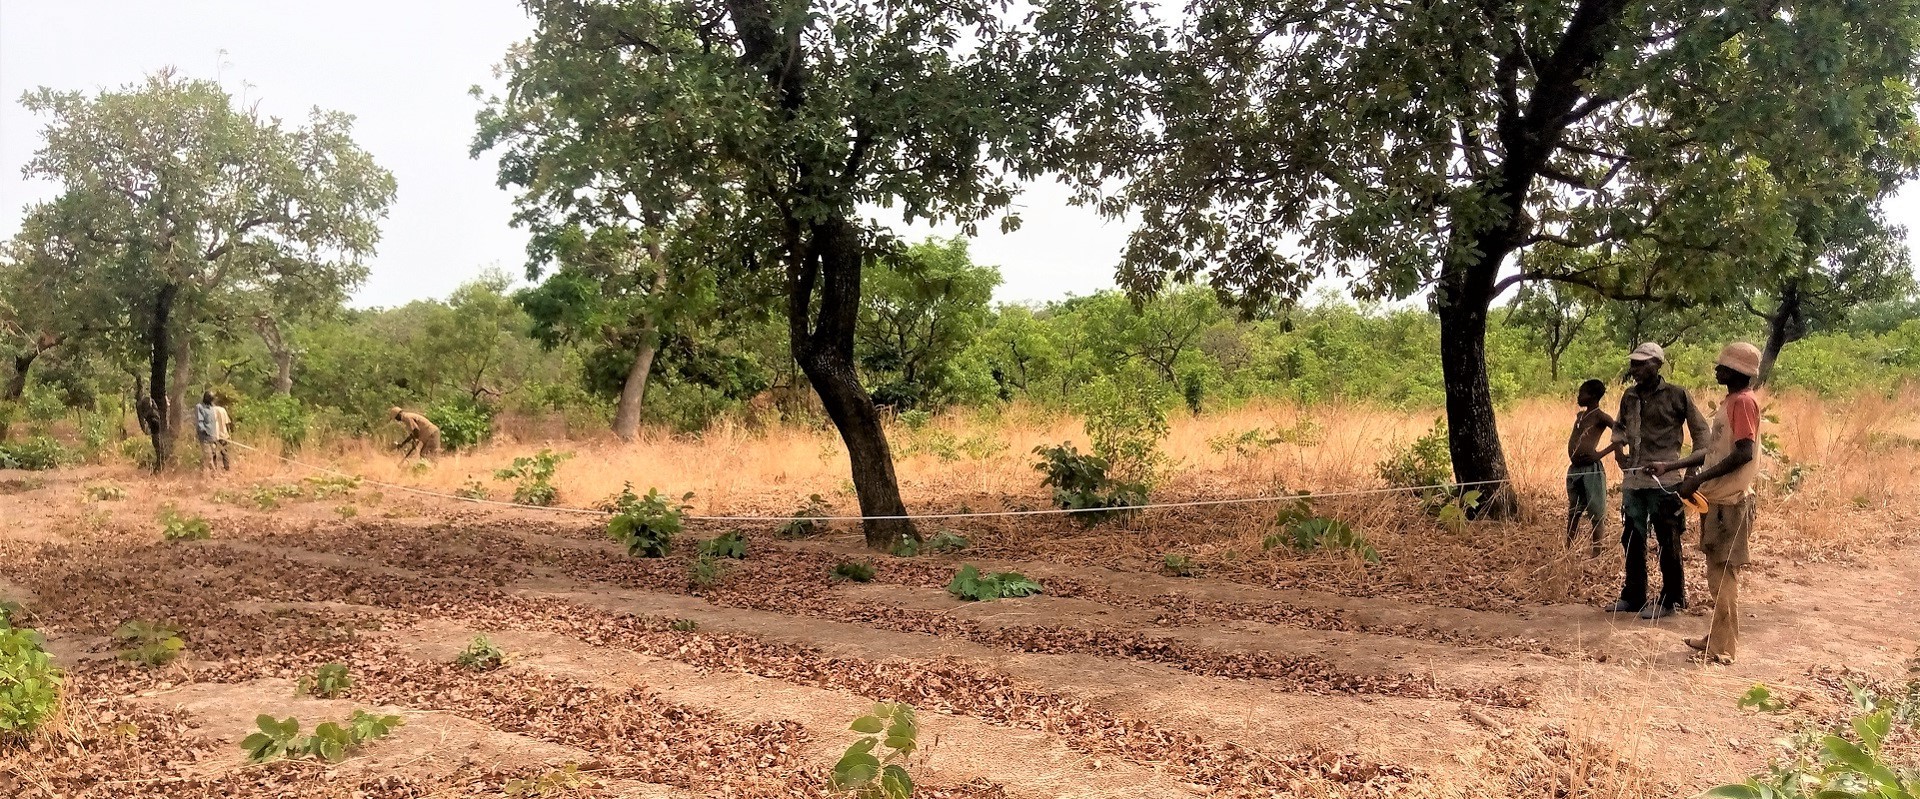 Benin siccità piogge agricoltura mani tese 2021